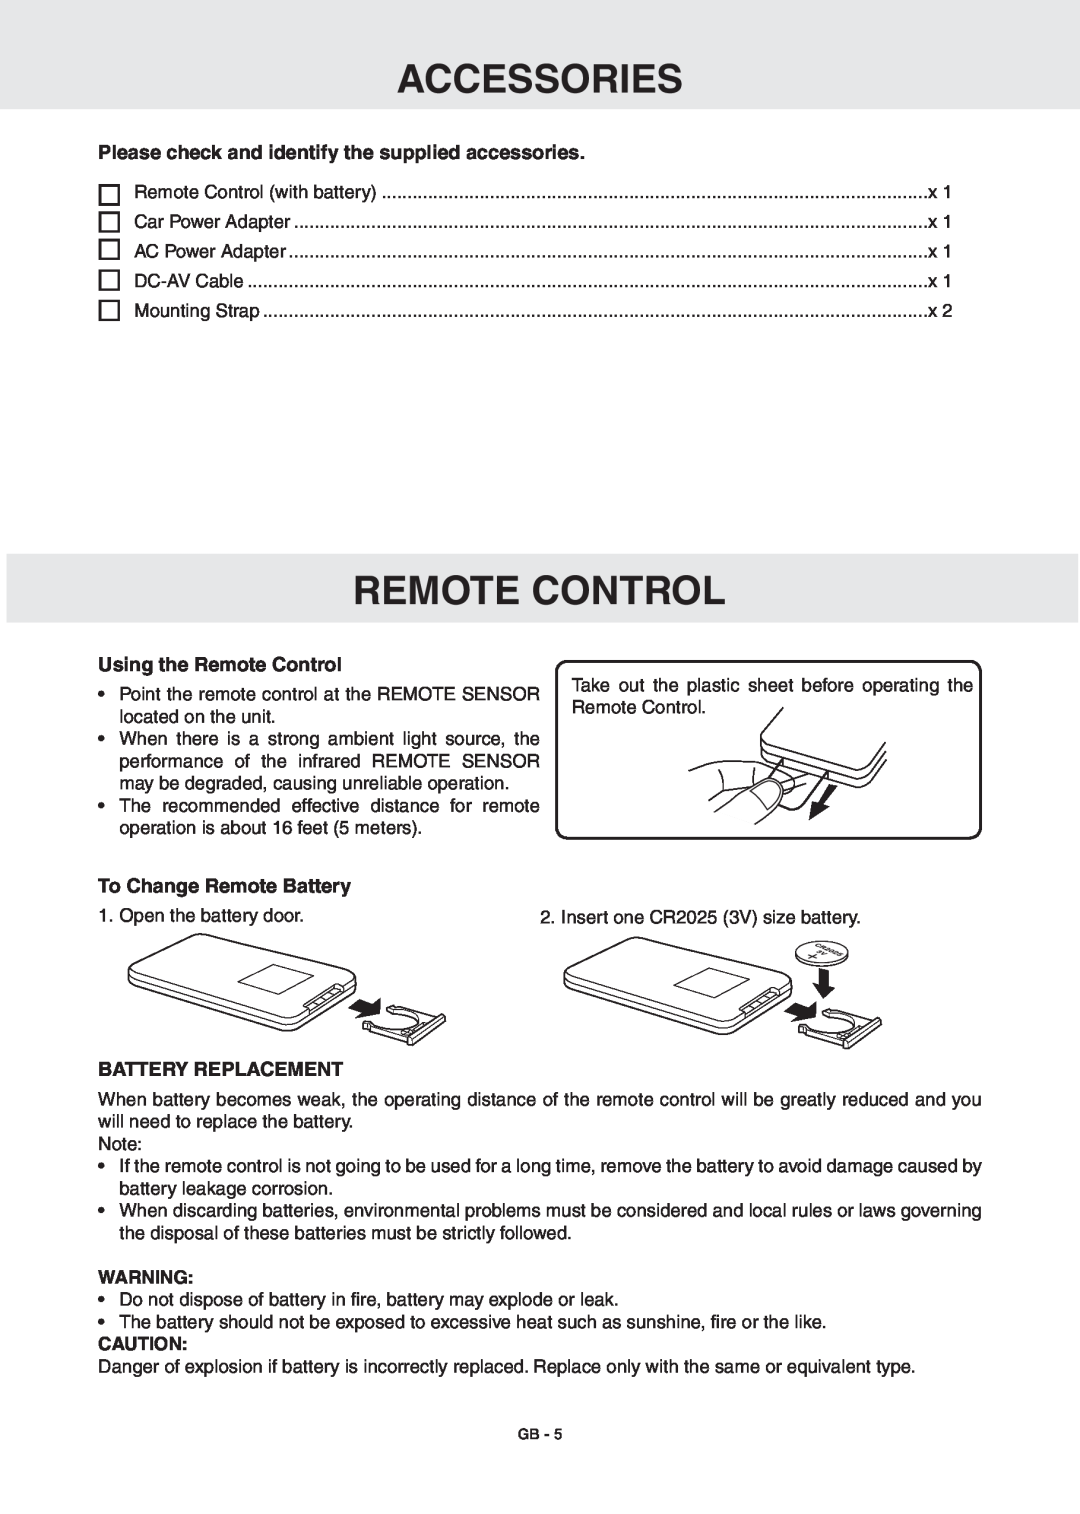 RCA DRC6389T Accessories, remote control, Please check and identify the supplied accessories, Using the Remote Control 